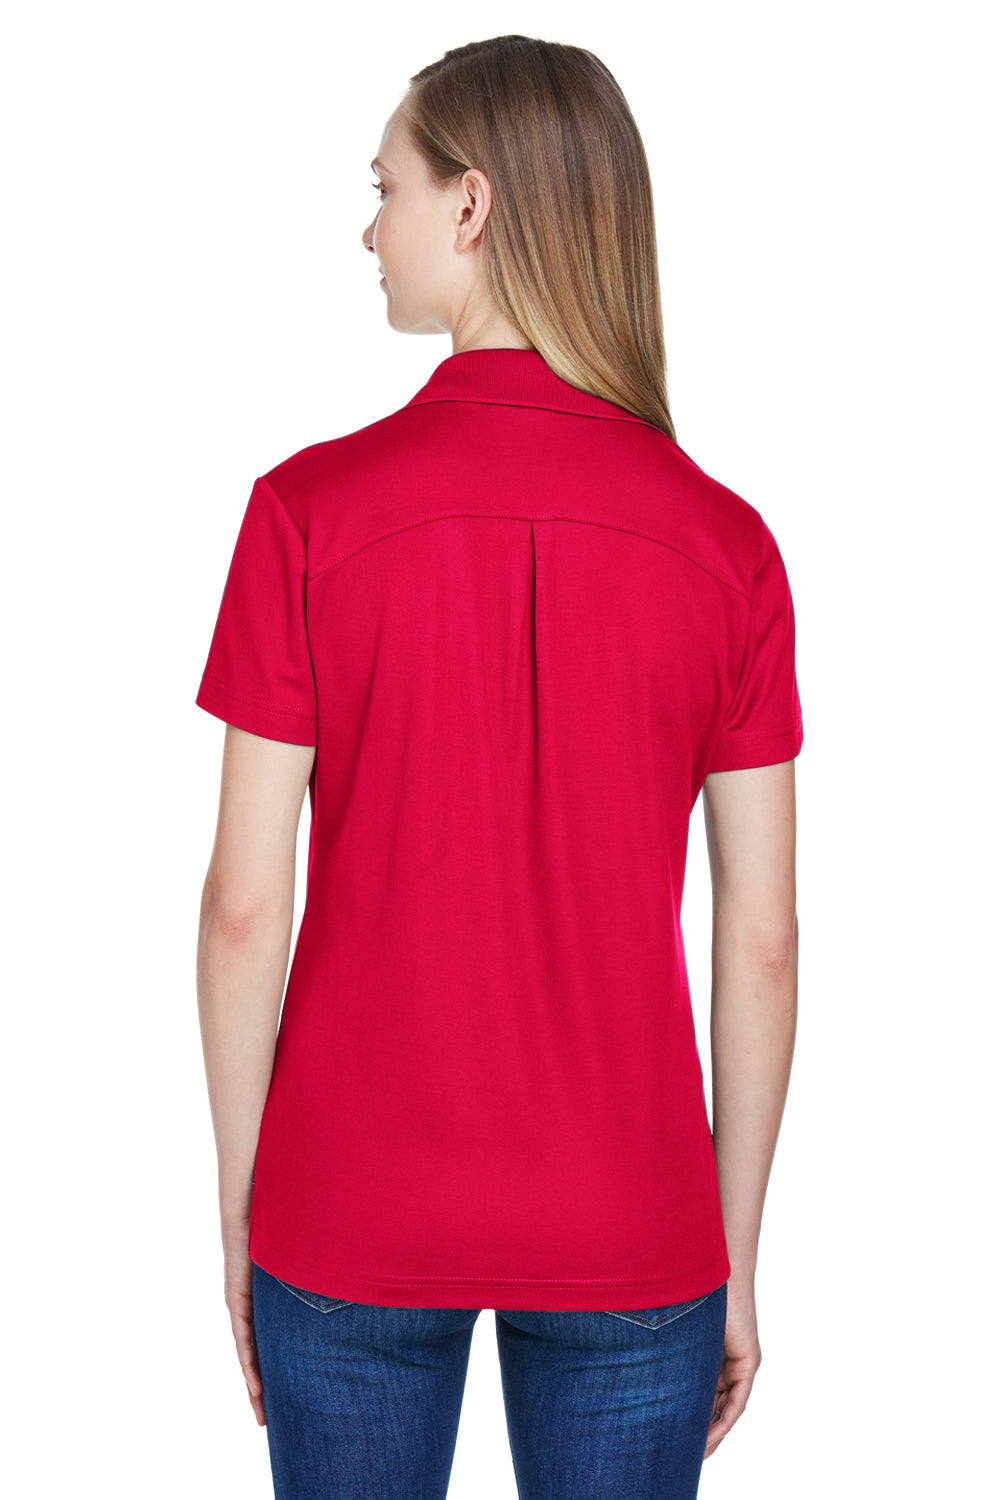 Devon & Jones DG20W Womens CrownLux Performance Moisture Wicking Short Sleeve Polo Shirt Red Back